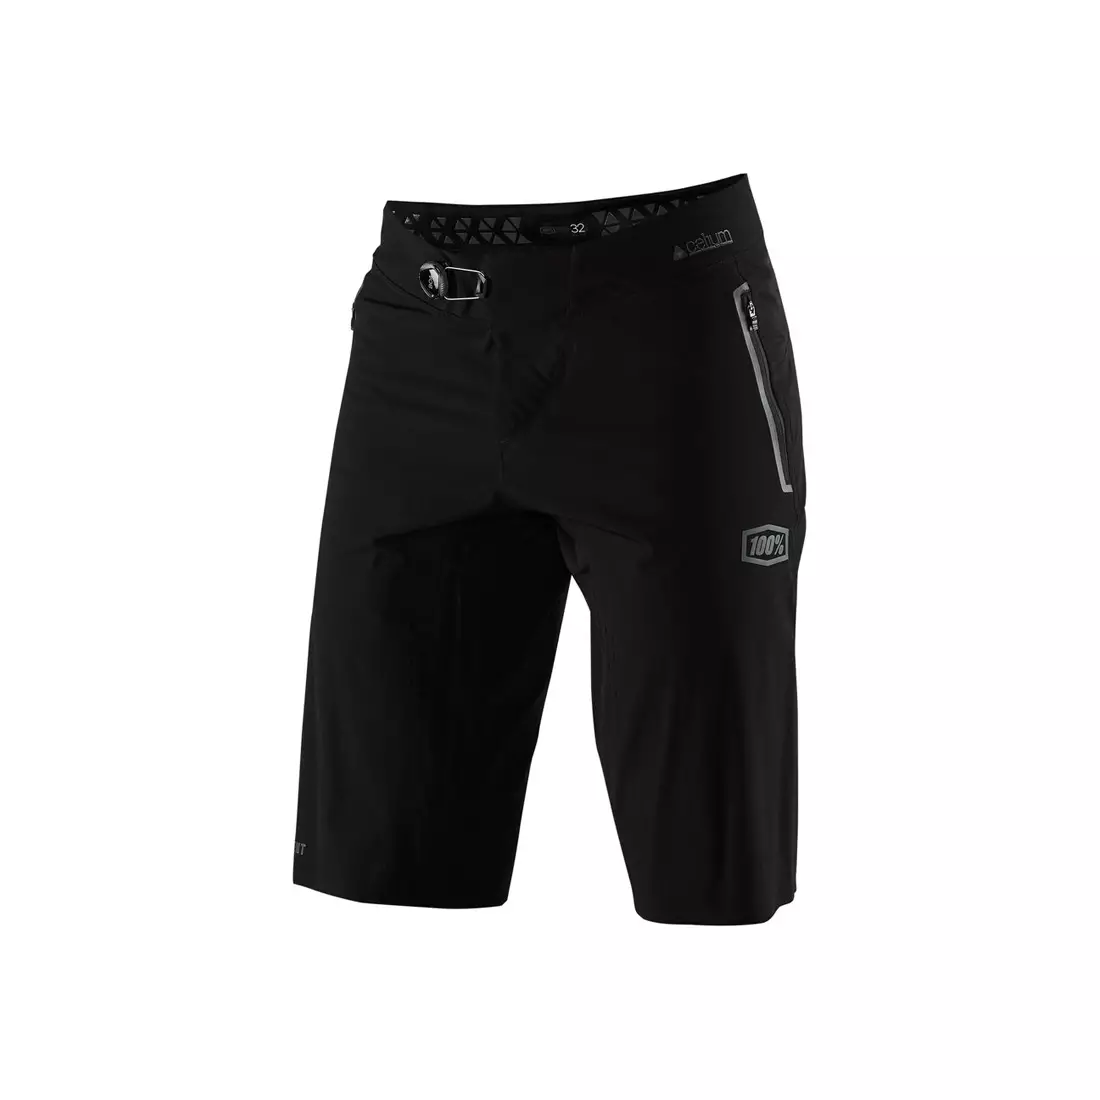 100% men's cycling shorts celium black STO-42210-001-38